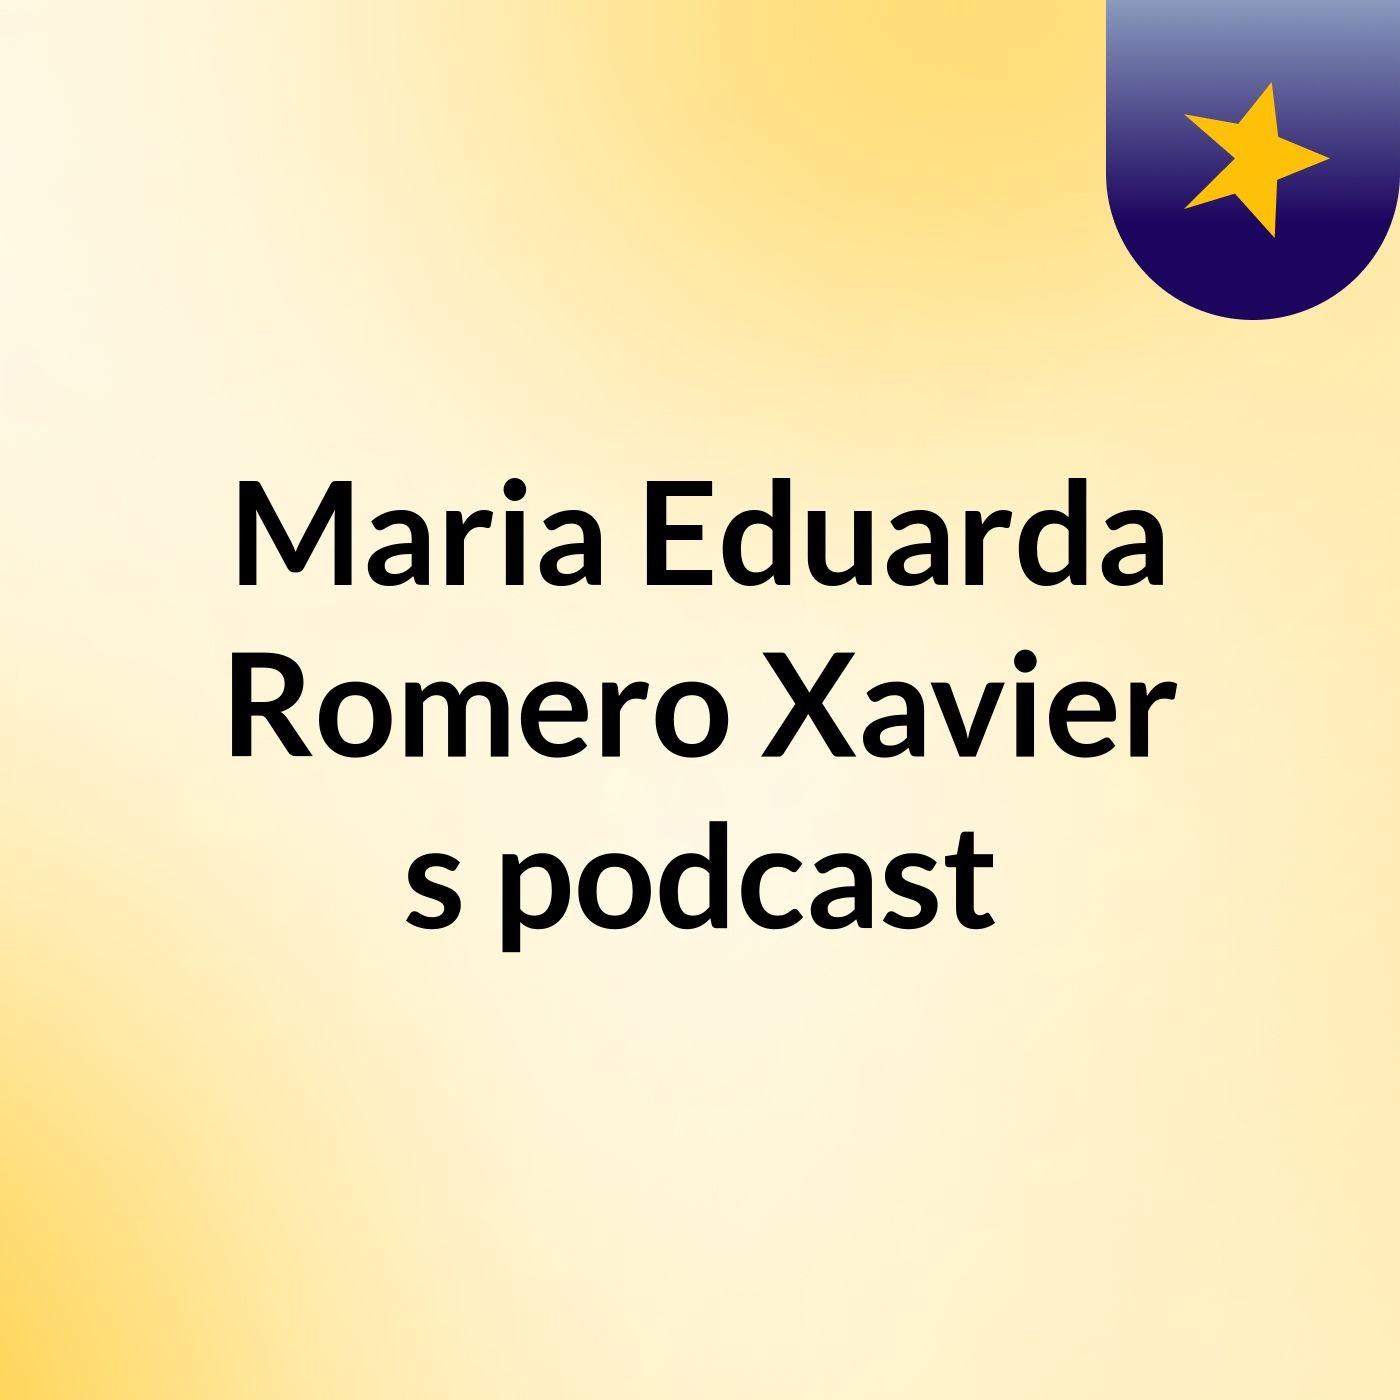 Maria Eduarda Romero Xavier's podcast